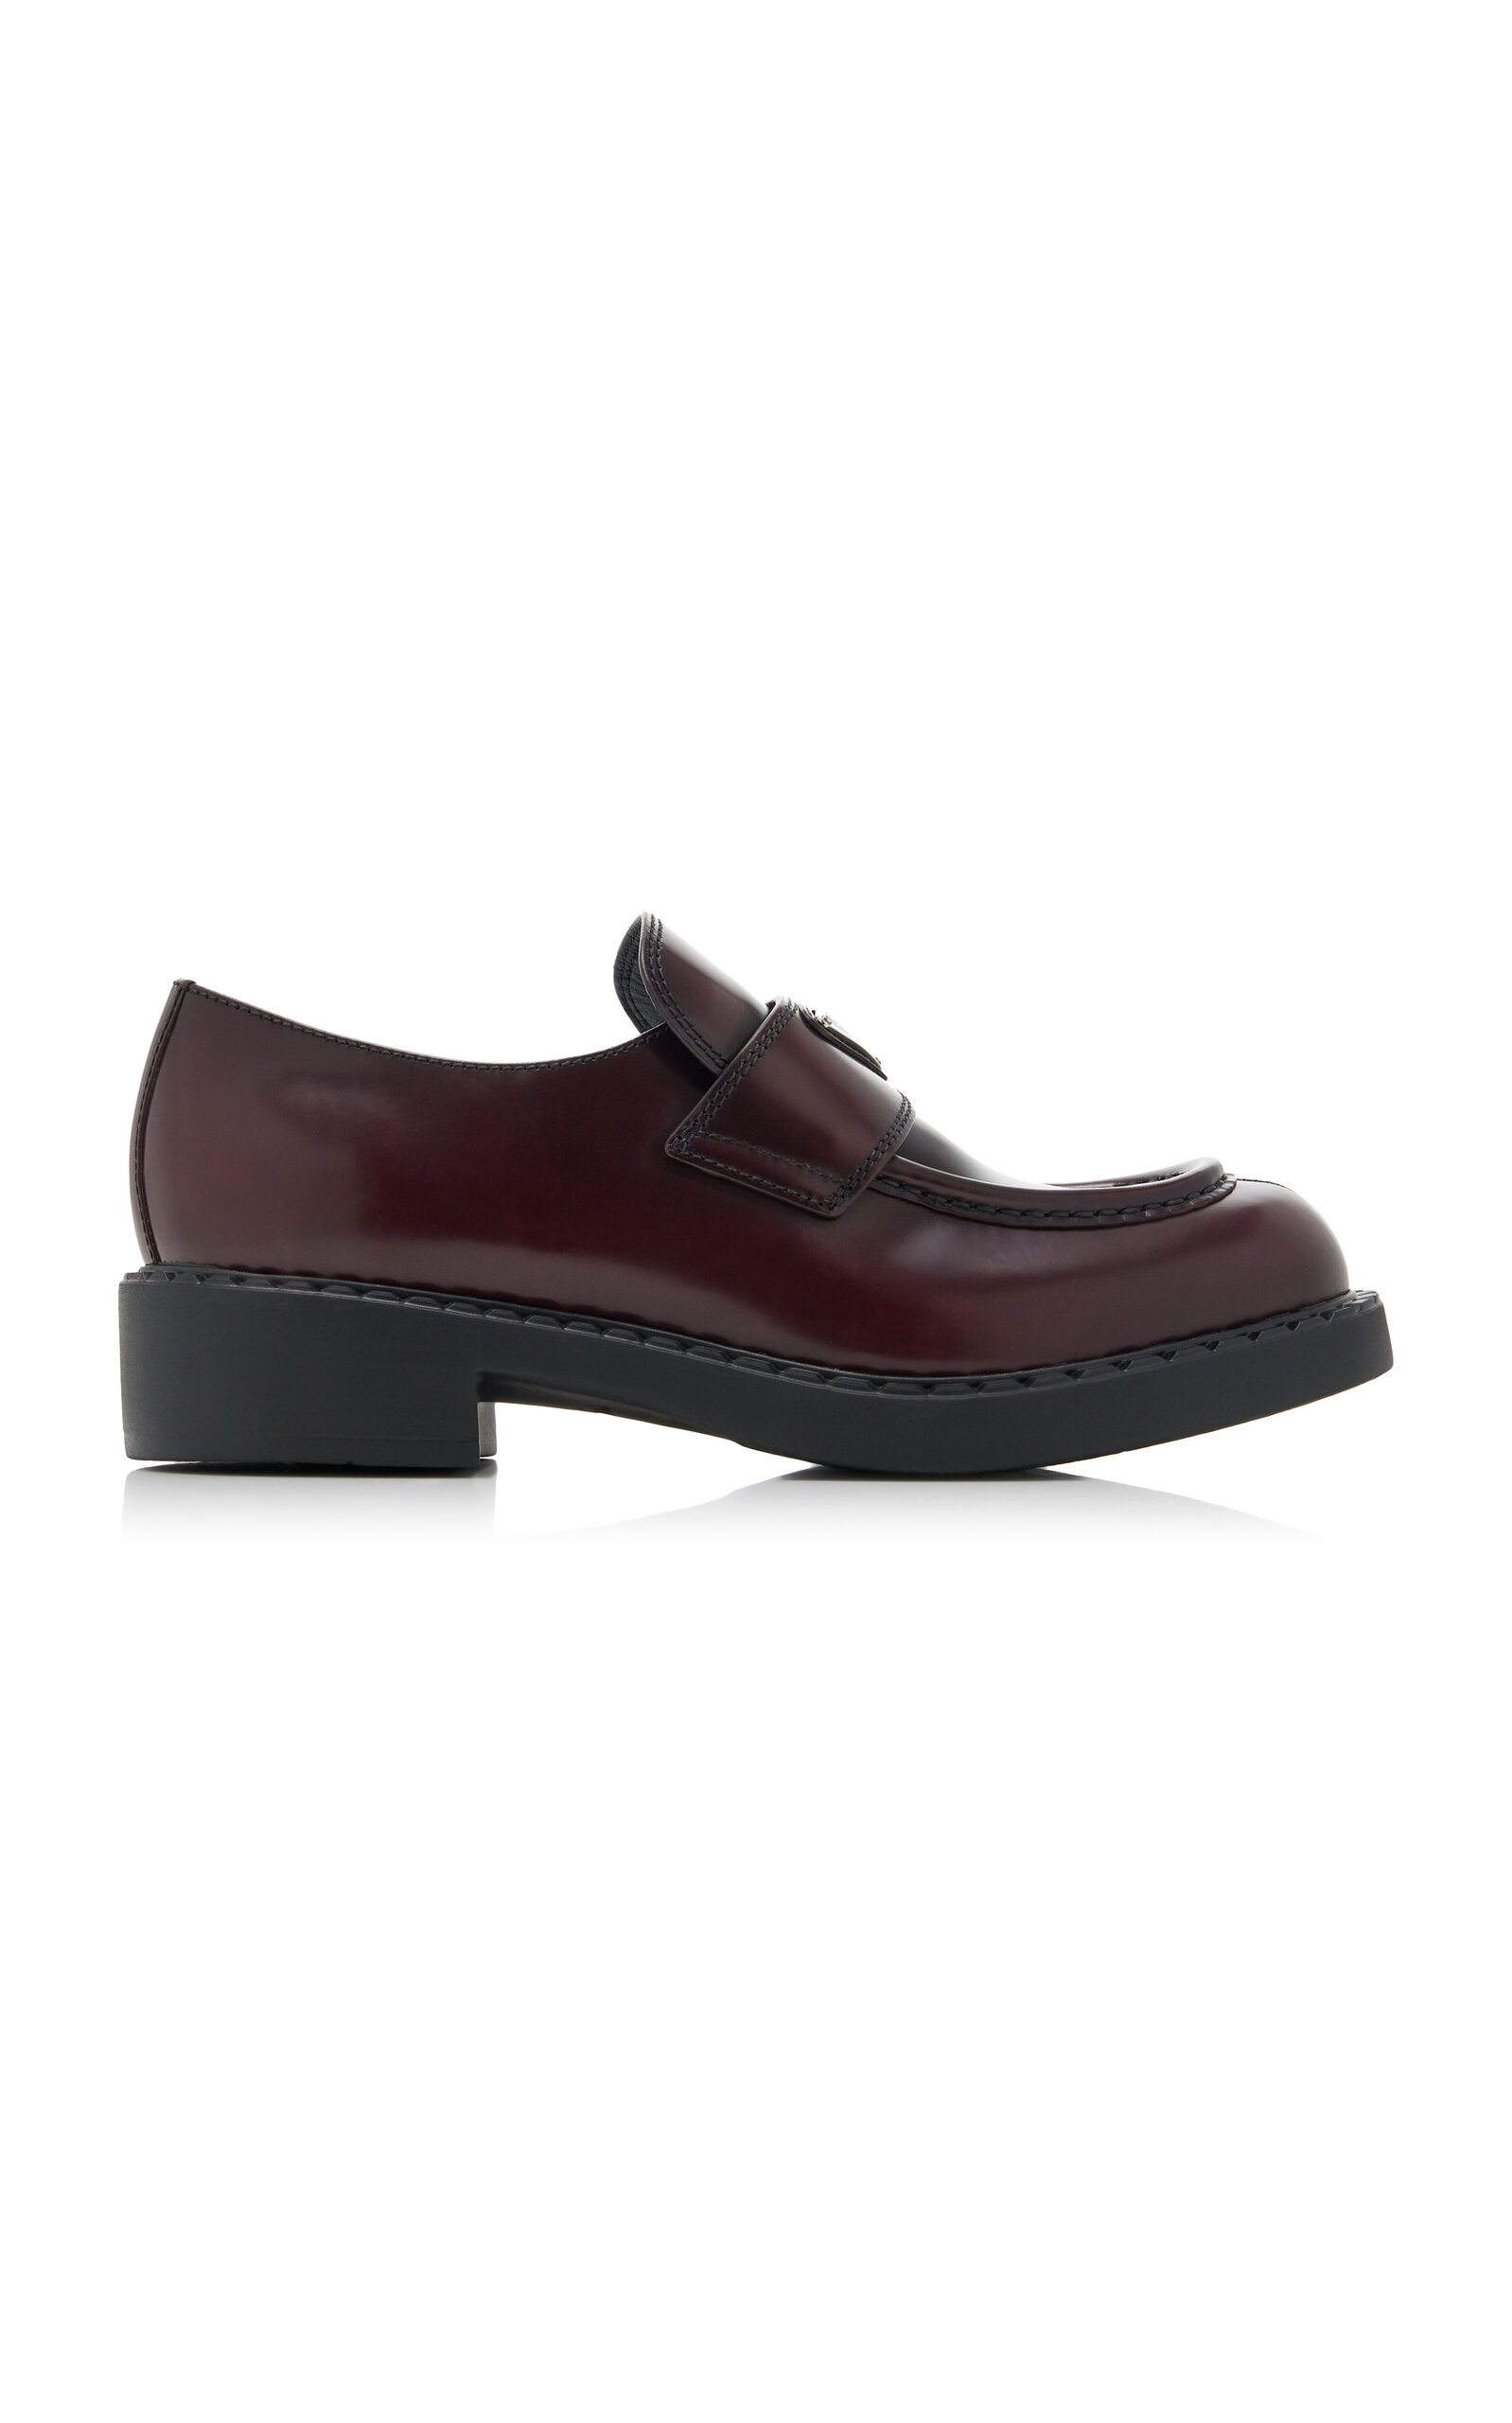 Prada - Leather Loafers - Brown - IT 38.5 - Moda Operandi